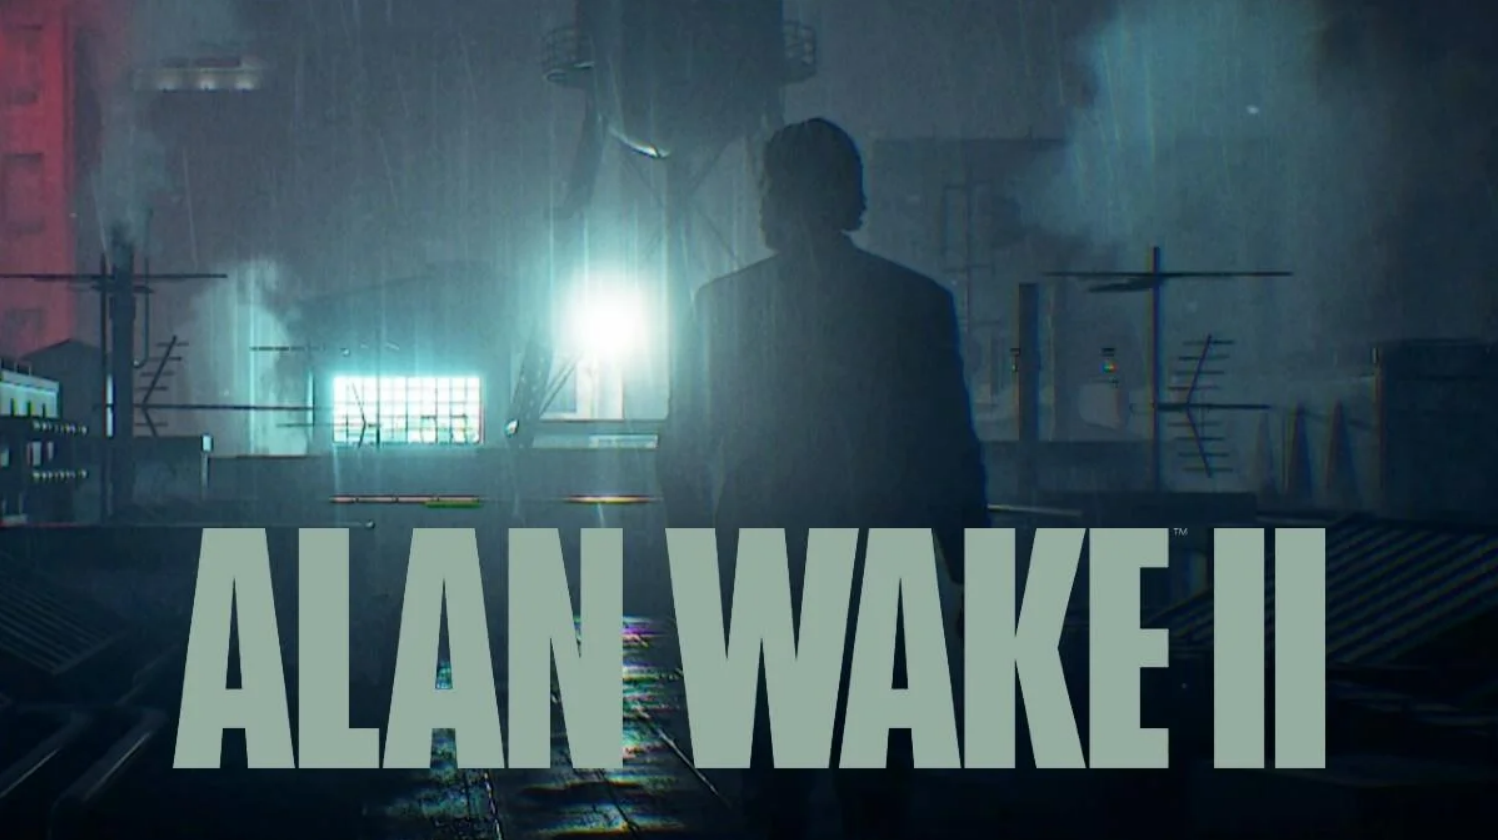 Alan Wake 2 Review Embargo Details Revealed